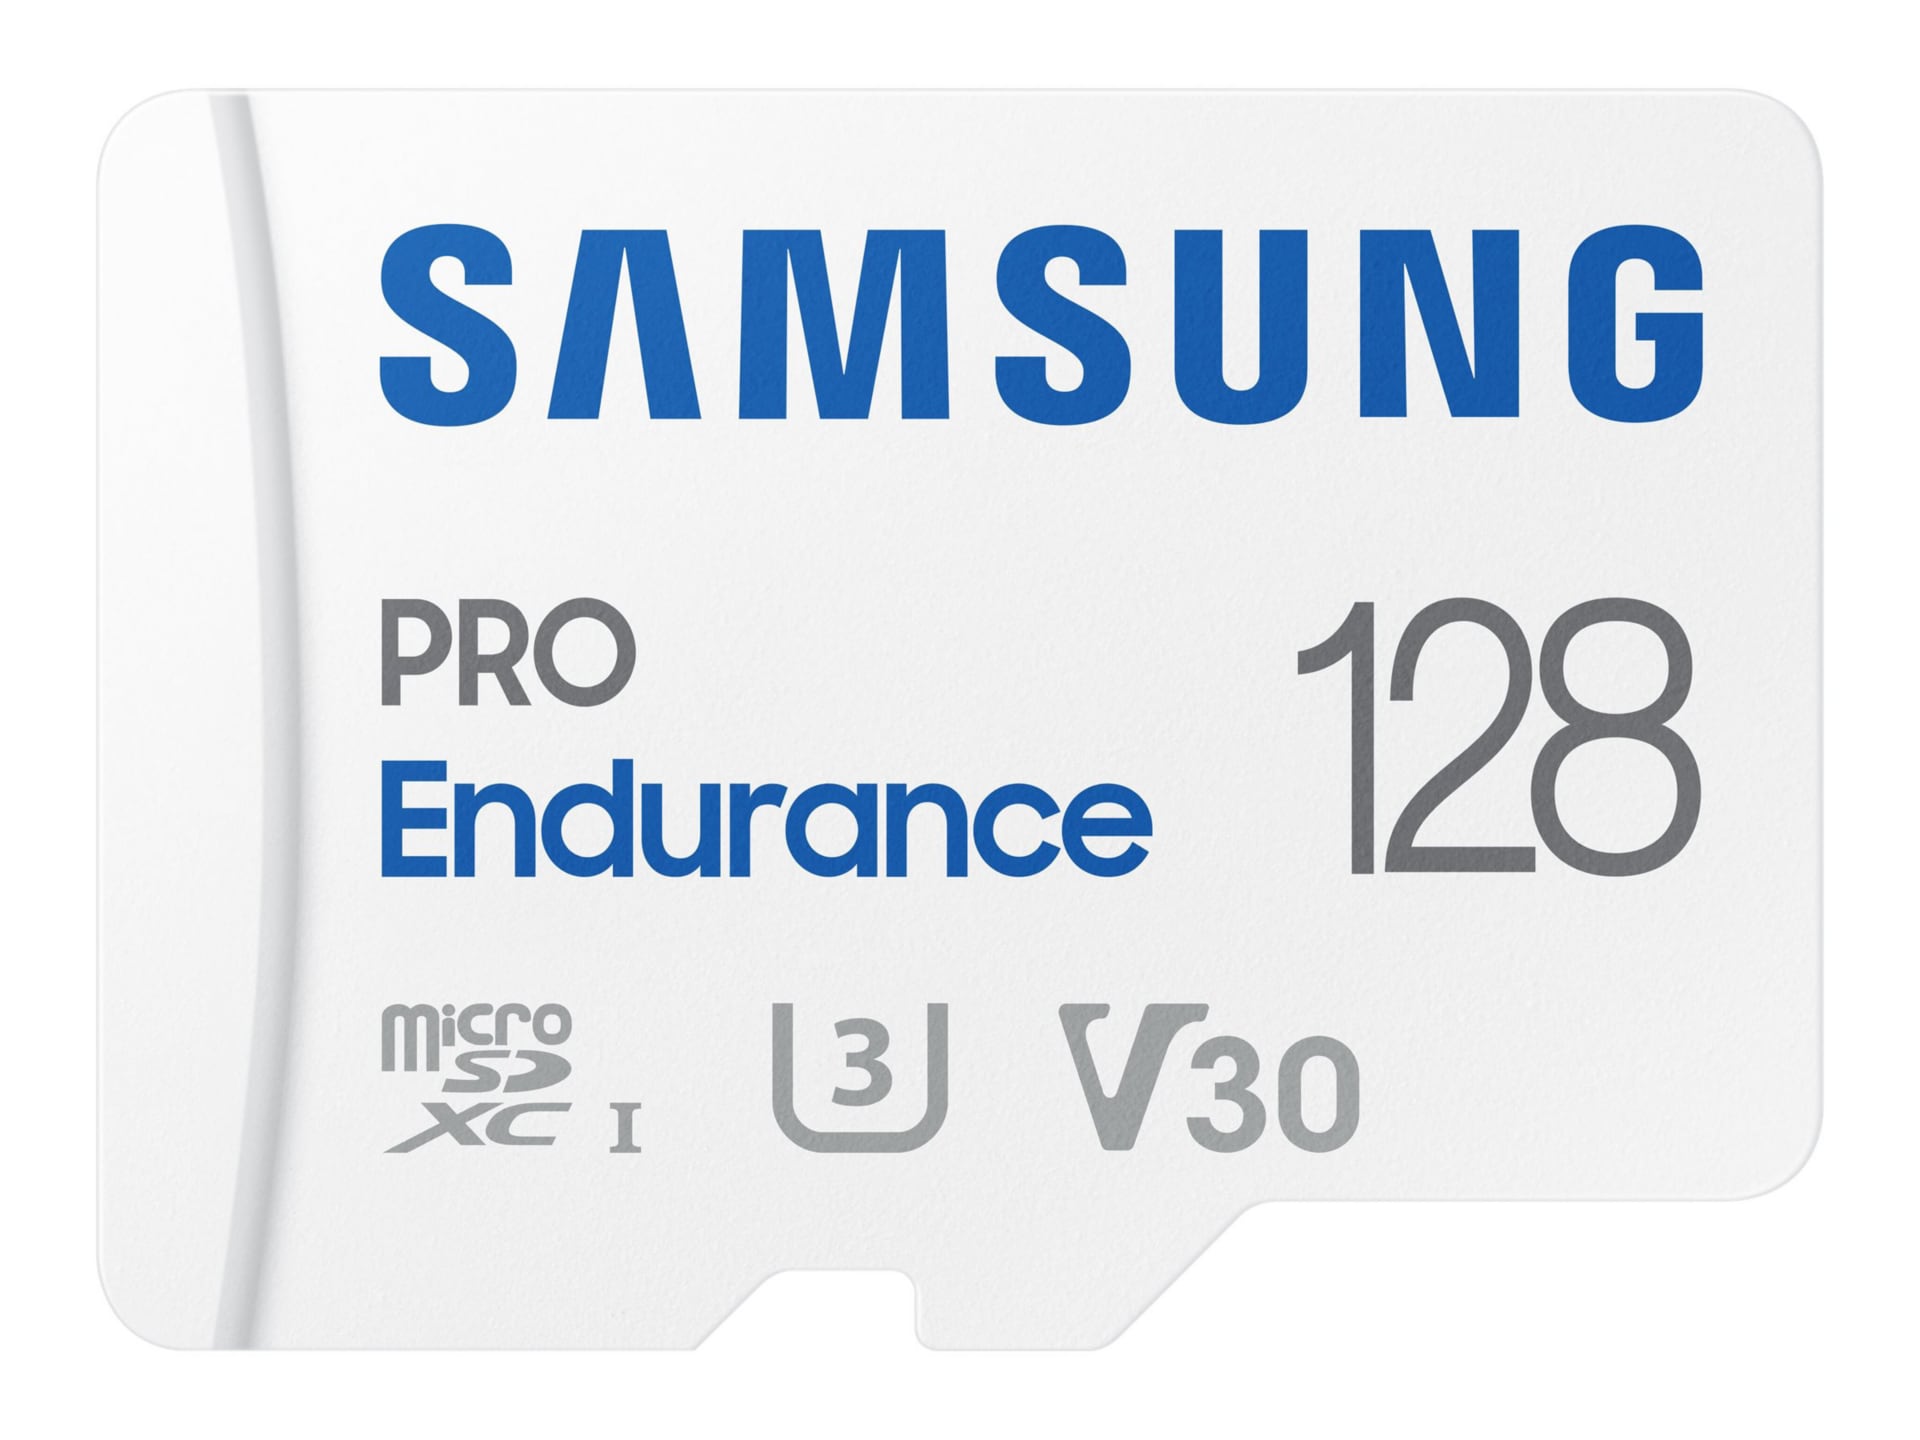 Samsung 128GB PRO Endurance microSDXC Memory Card with Adapter